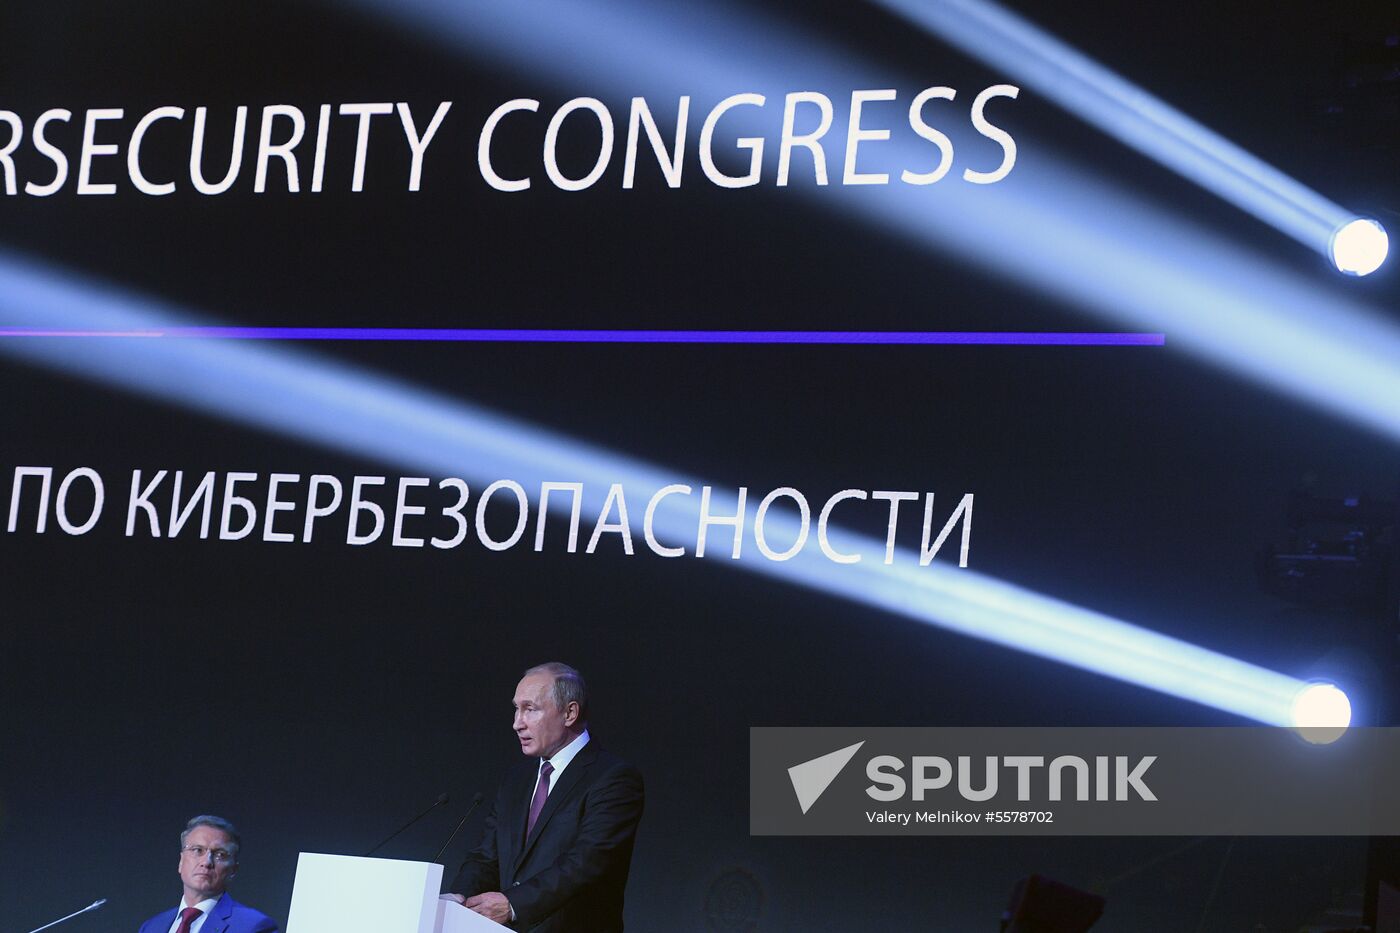 President Vladimir Putin attends International Cybersecurity Congress